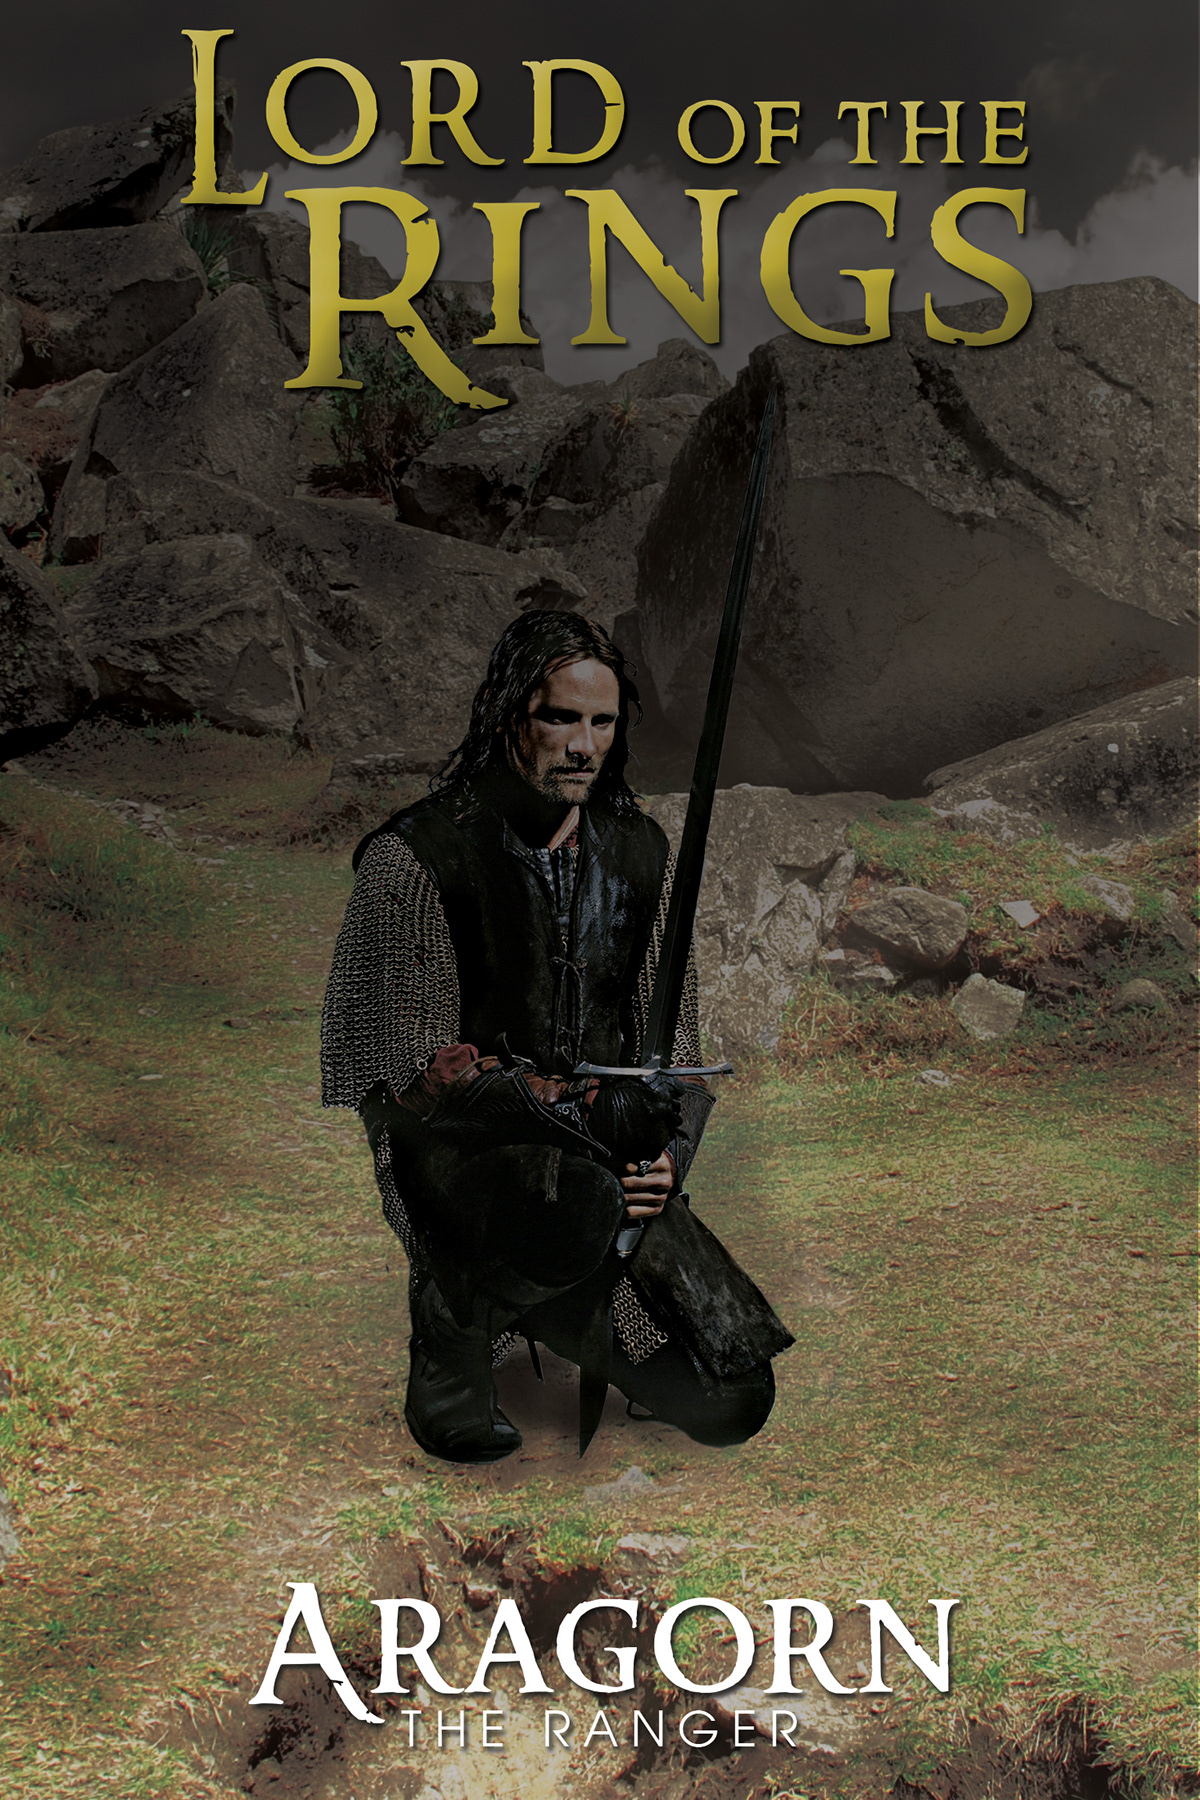 LOTR frodo gandalf Samwise Aragorn movie poster movie poster educational